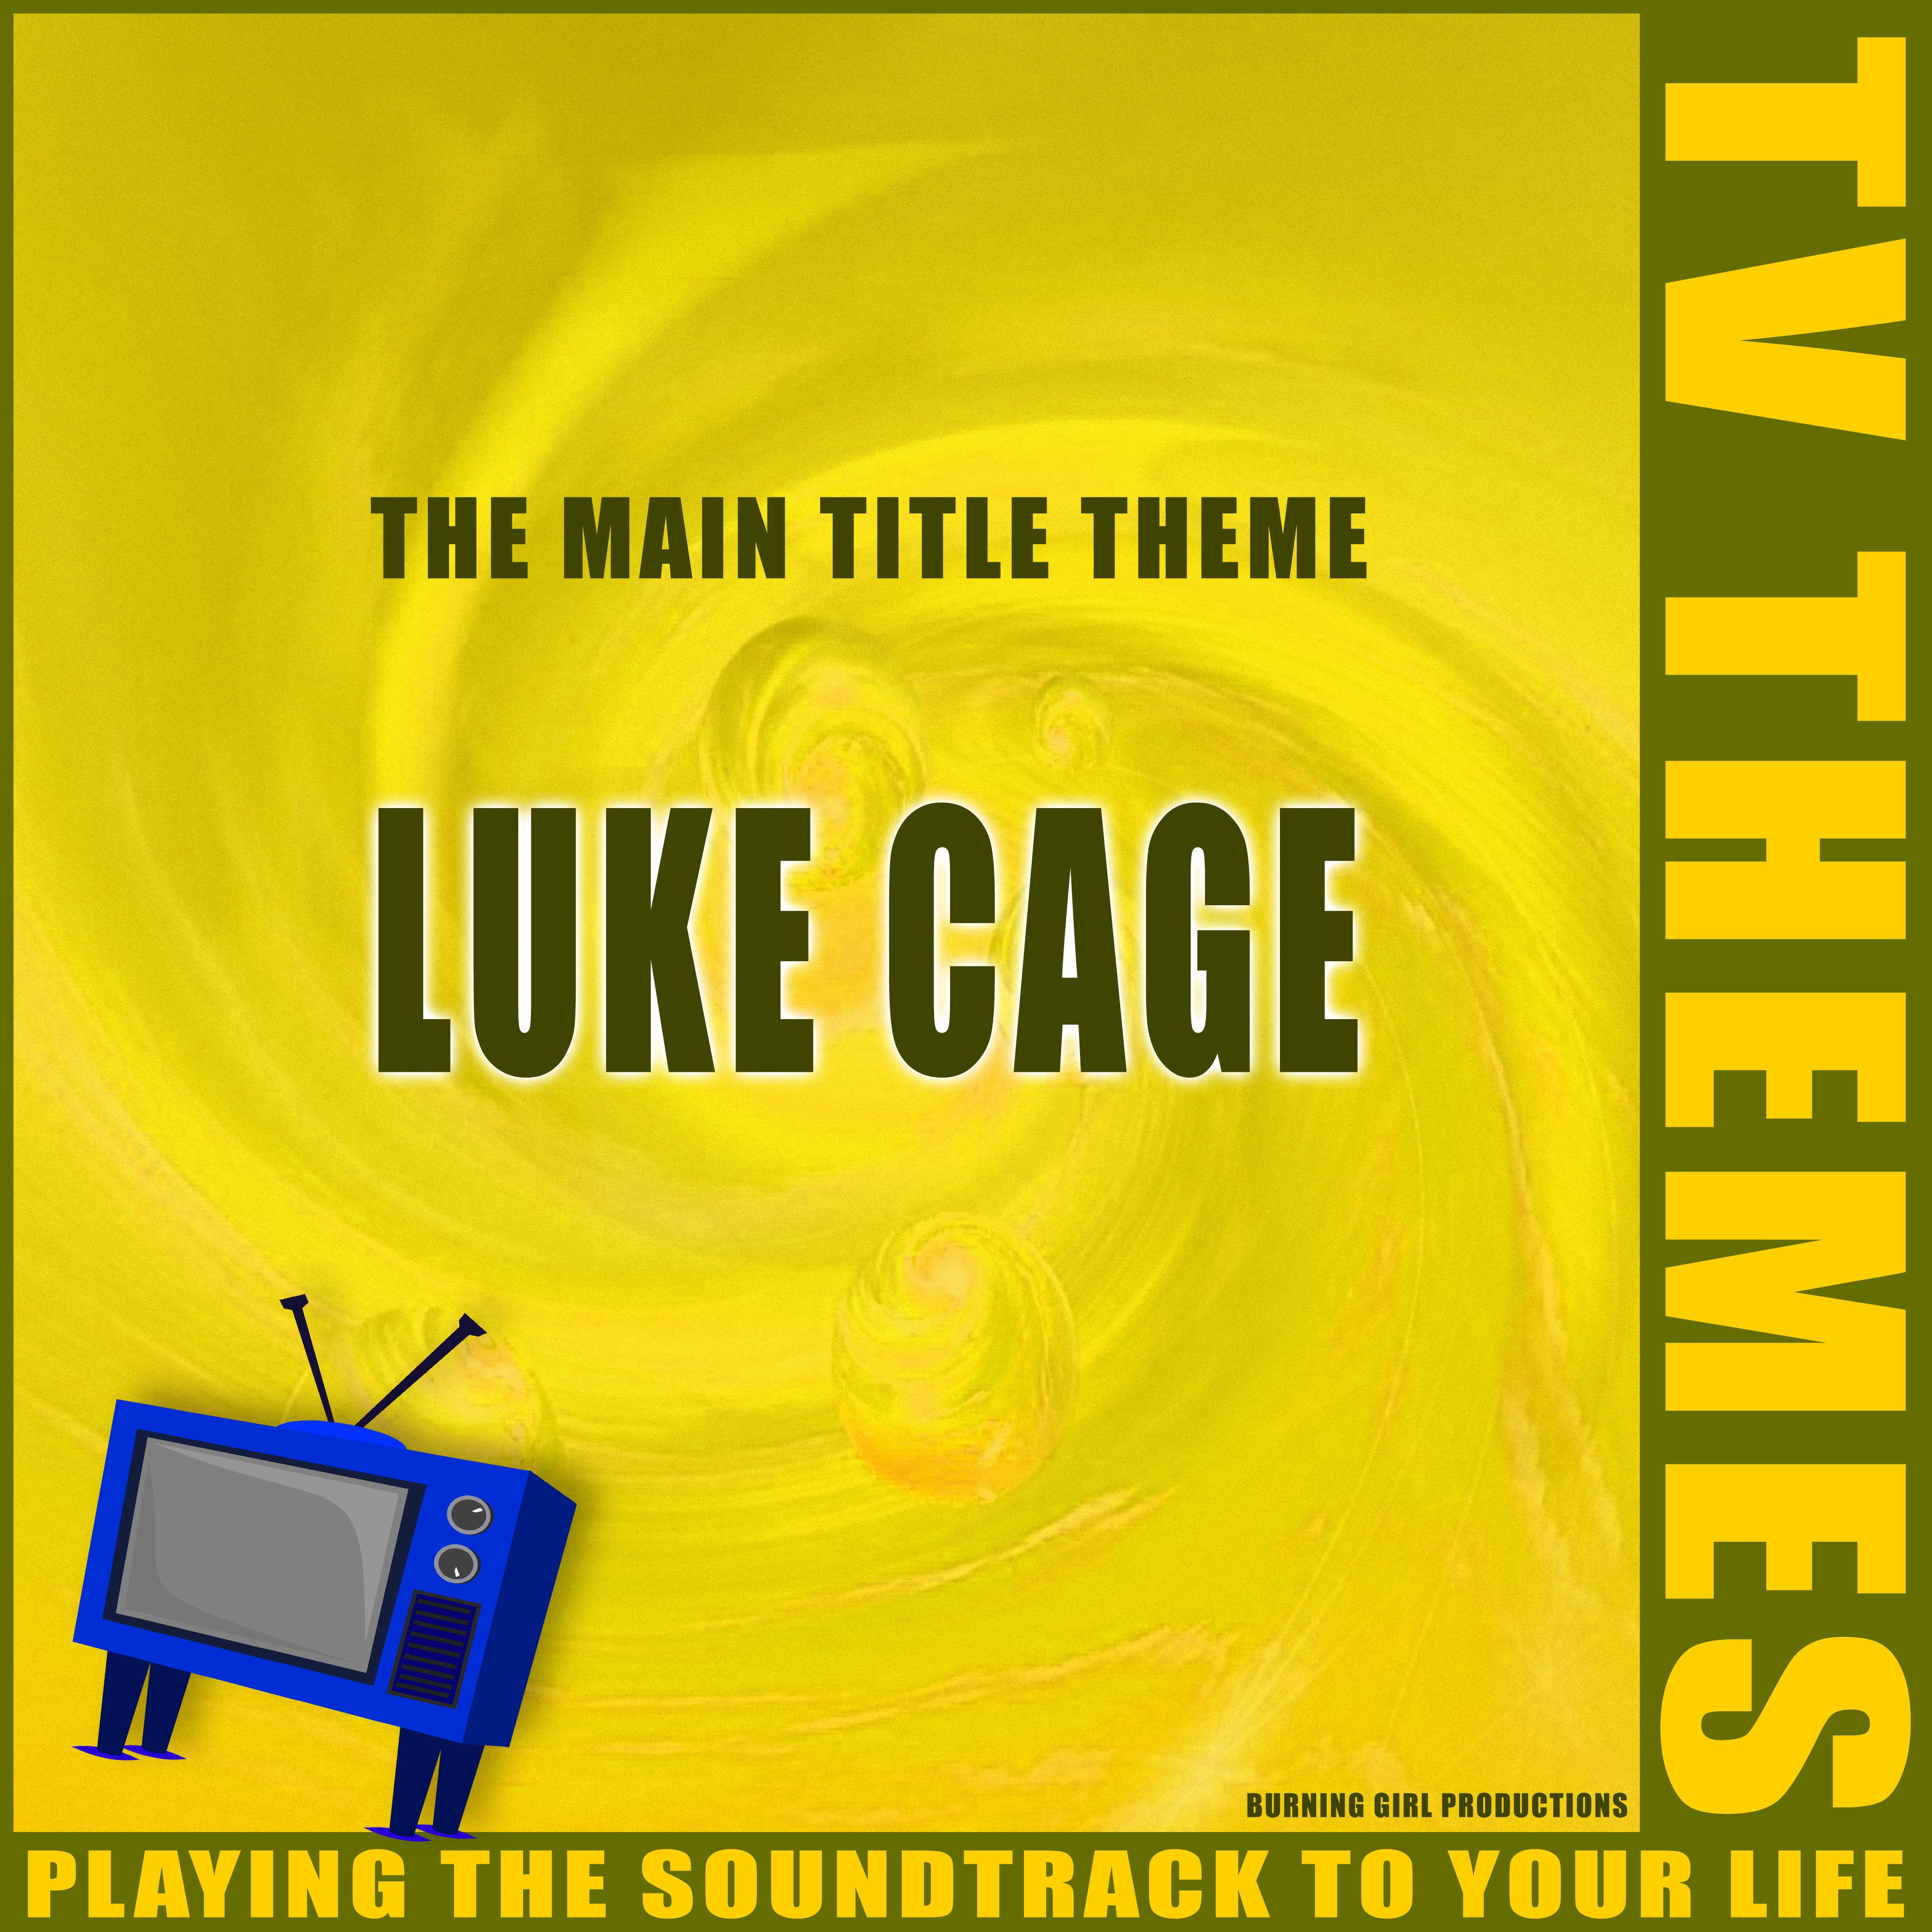 Luke Cage - The Main Title Theme